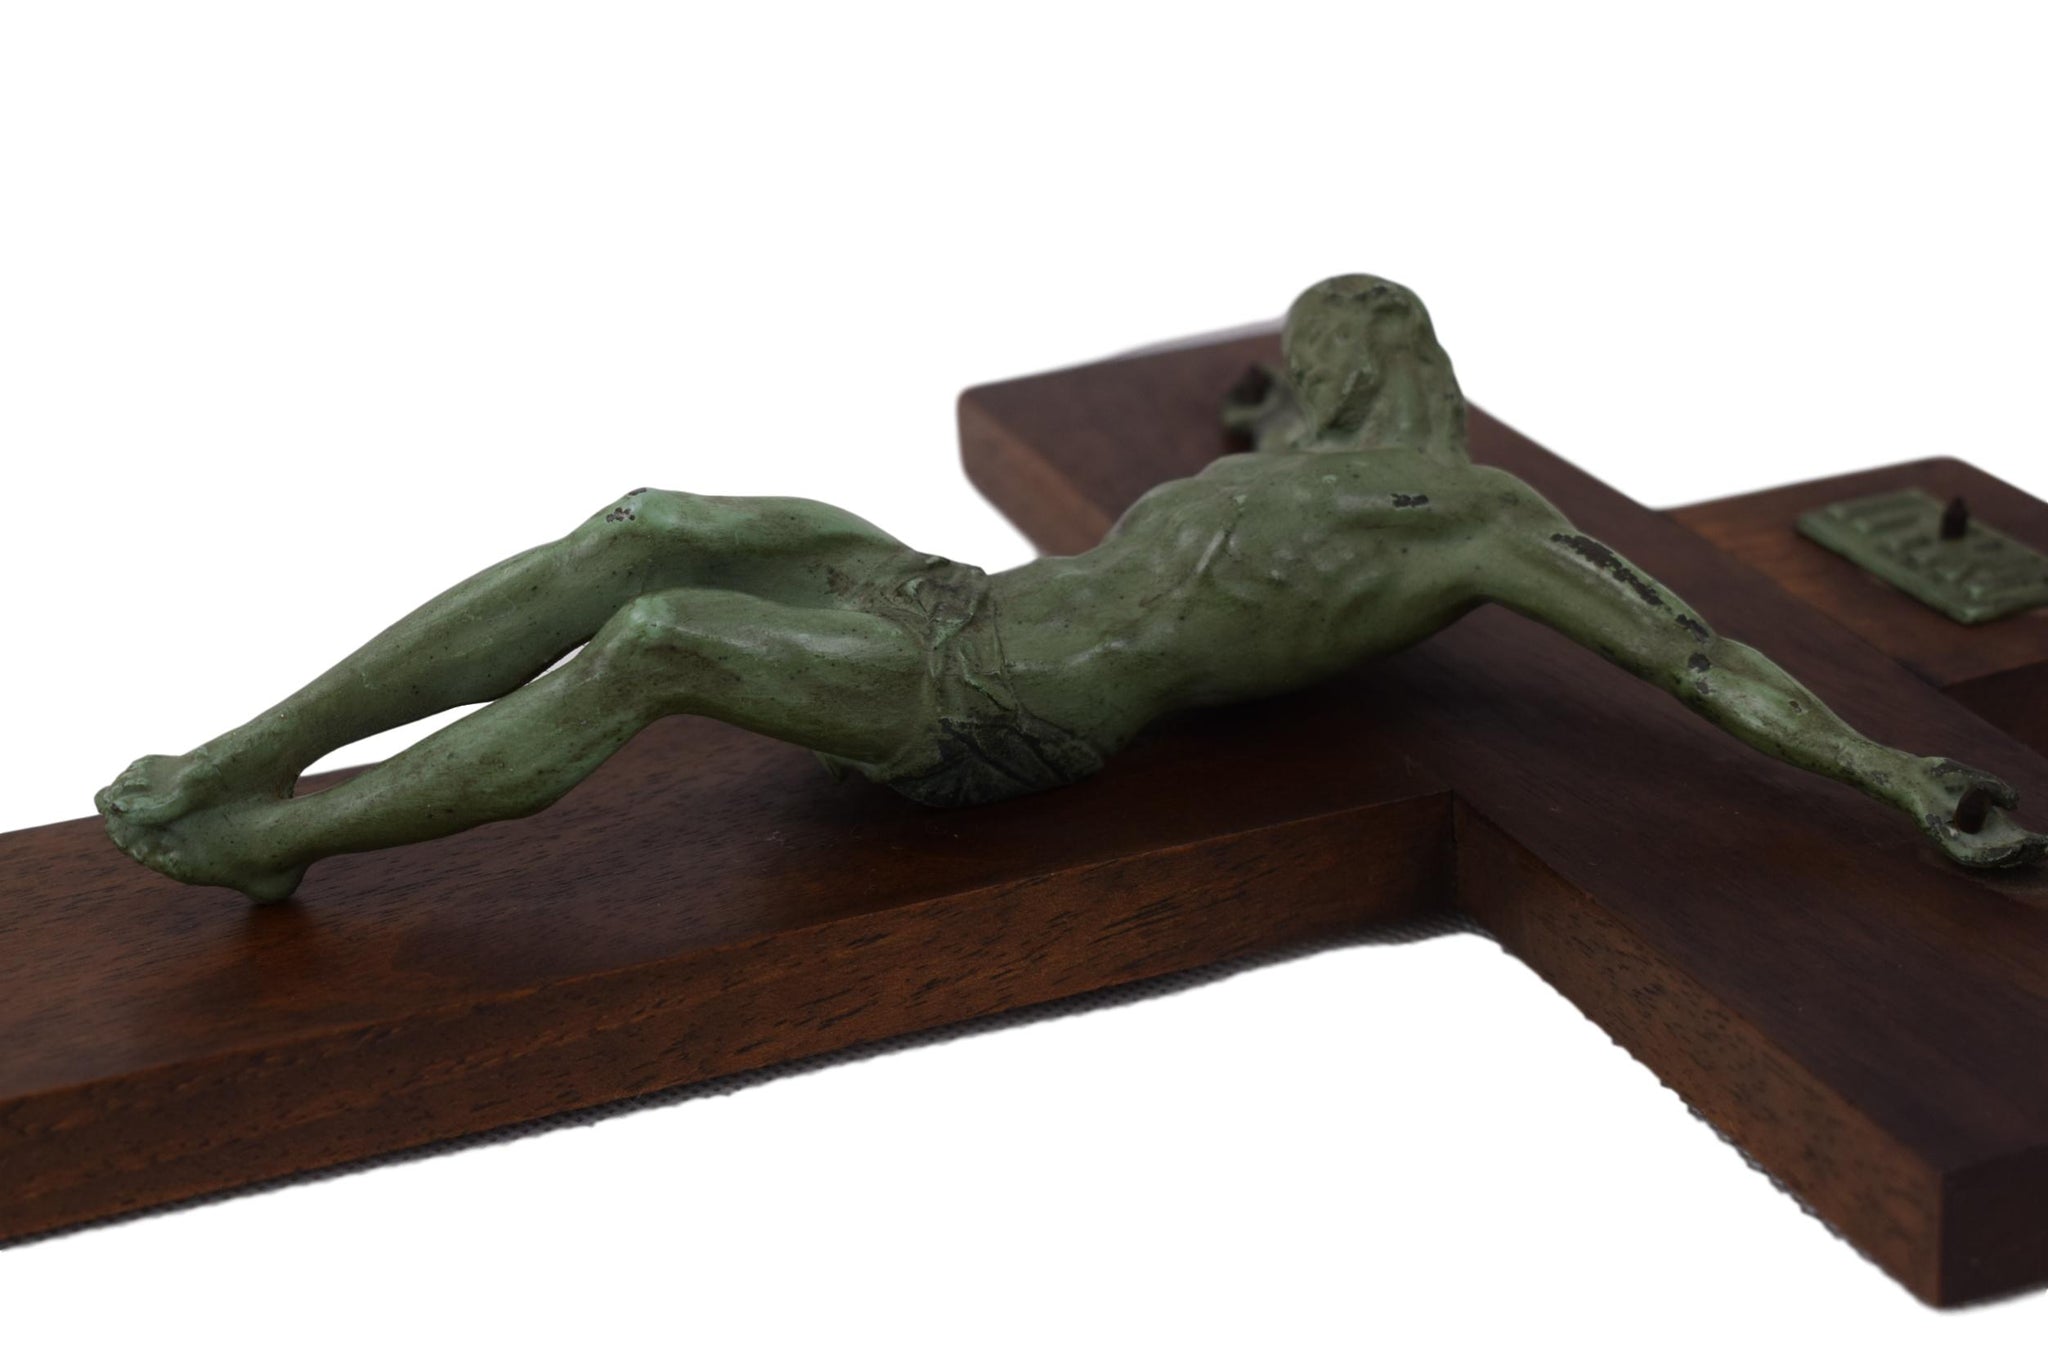 Green Bronze Patina Cross - Charmantiques